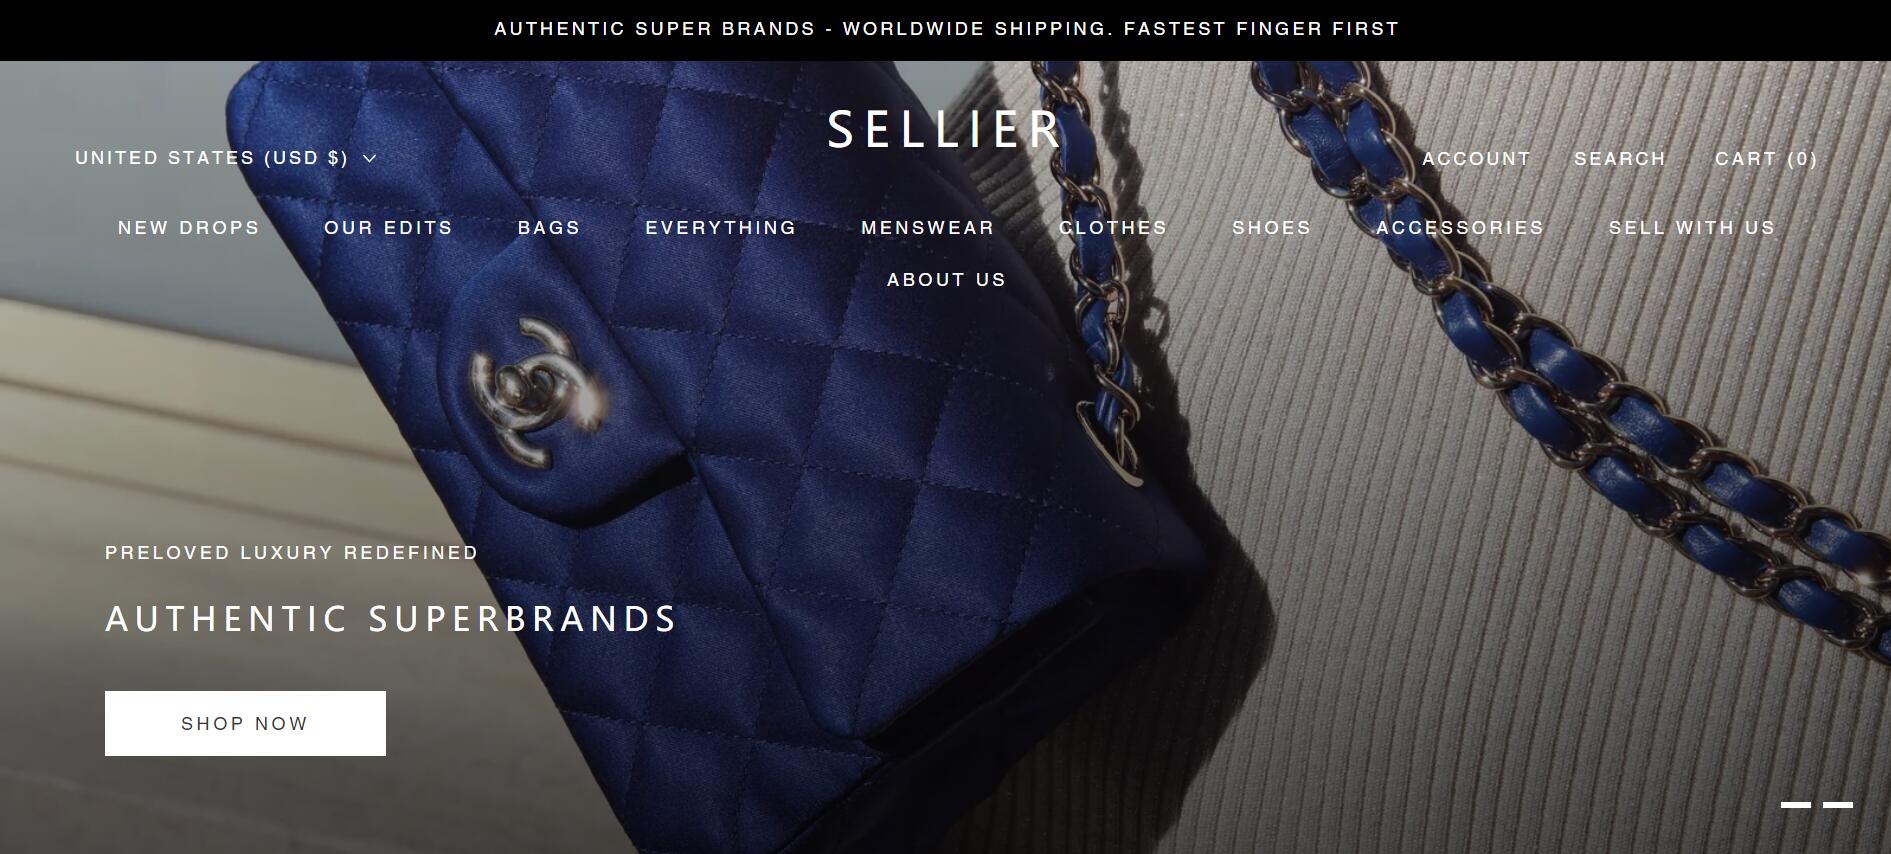 Sellier Knightsbridge Acquires Worn, Becoming UK’ s Largest Luxury Resale Platform